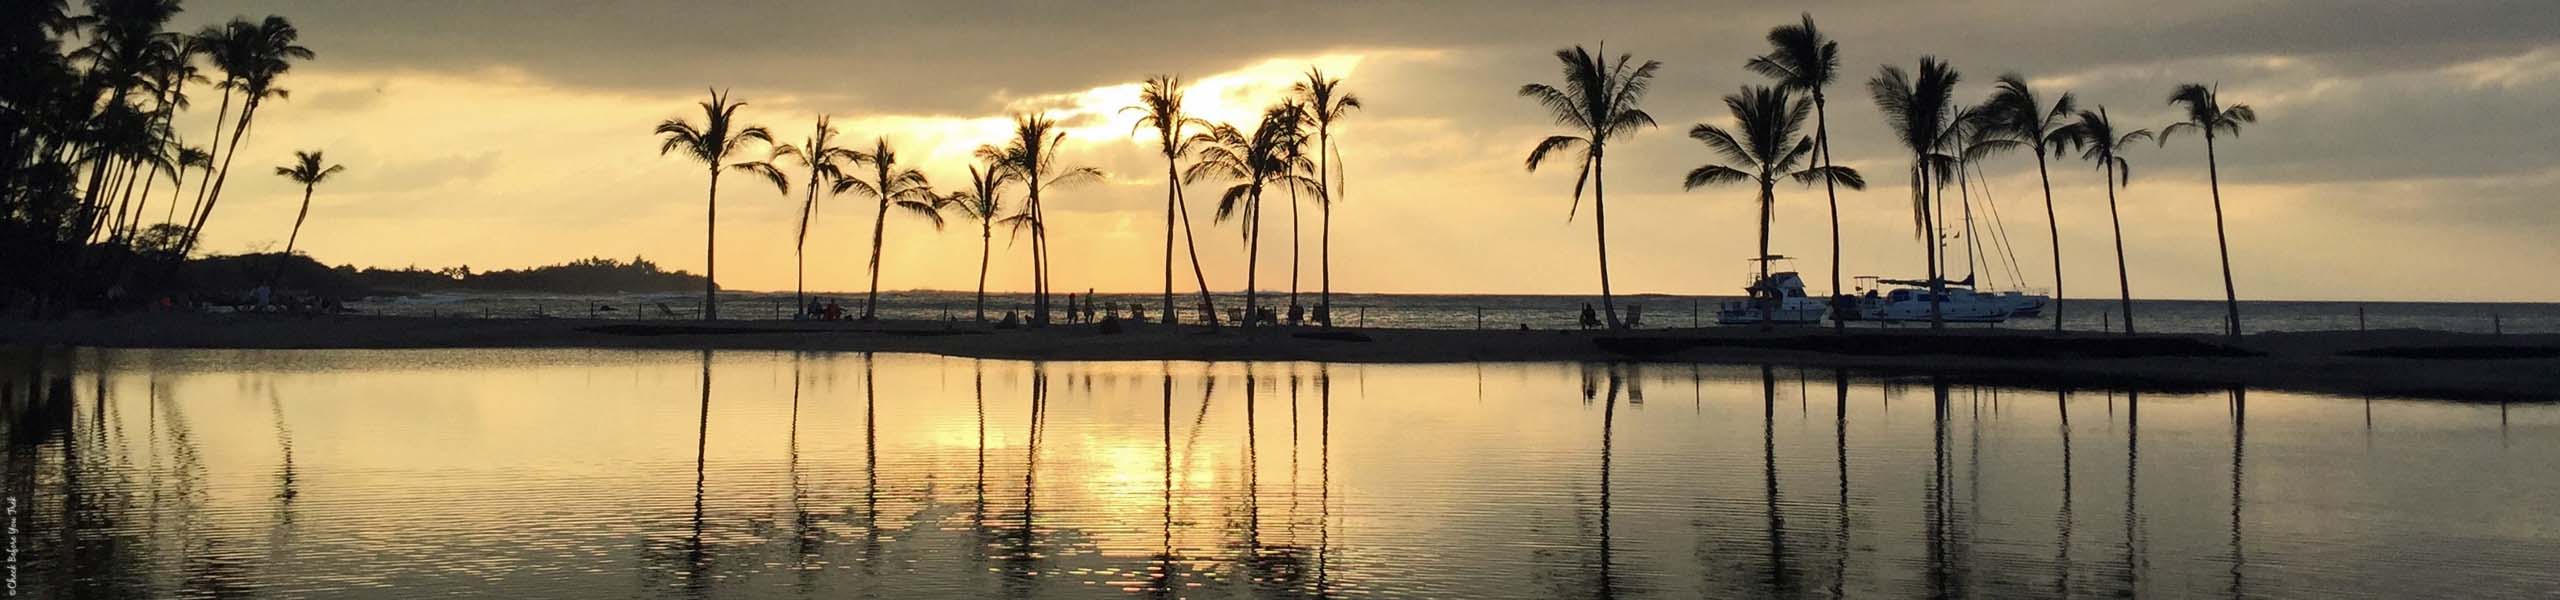 Sunset at Anaehoʻomalu Bay - Big Island, Hawaii, USA